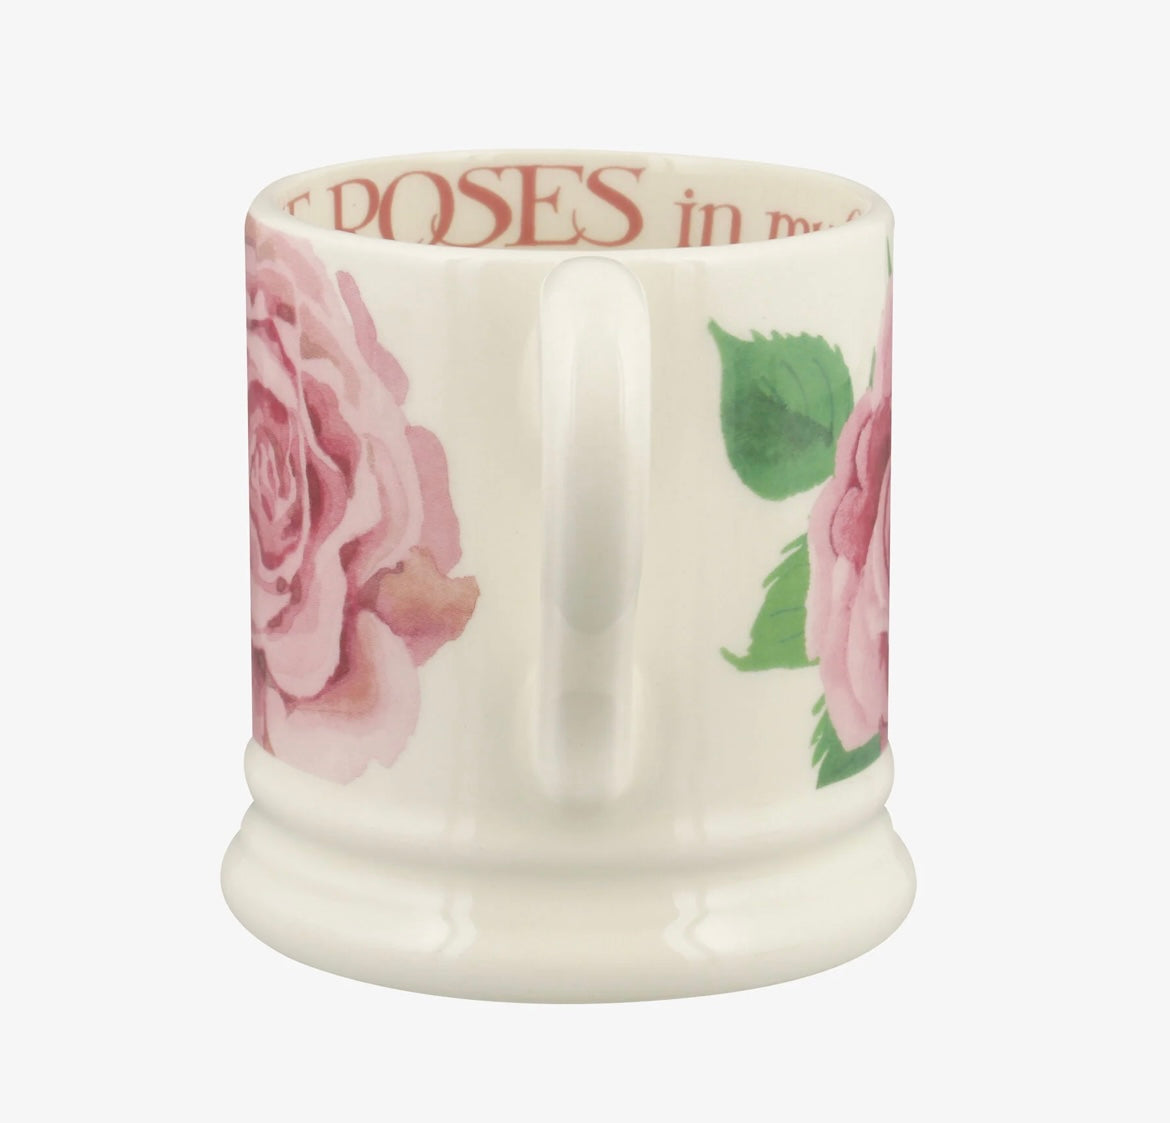 Emma Bridgewater Roses all my life Half Pint Mug